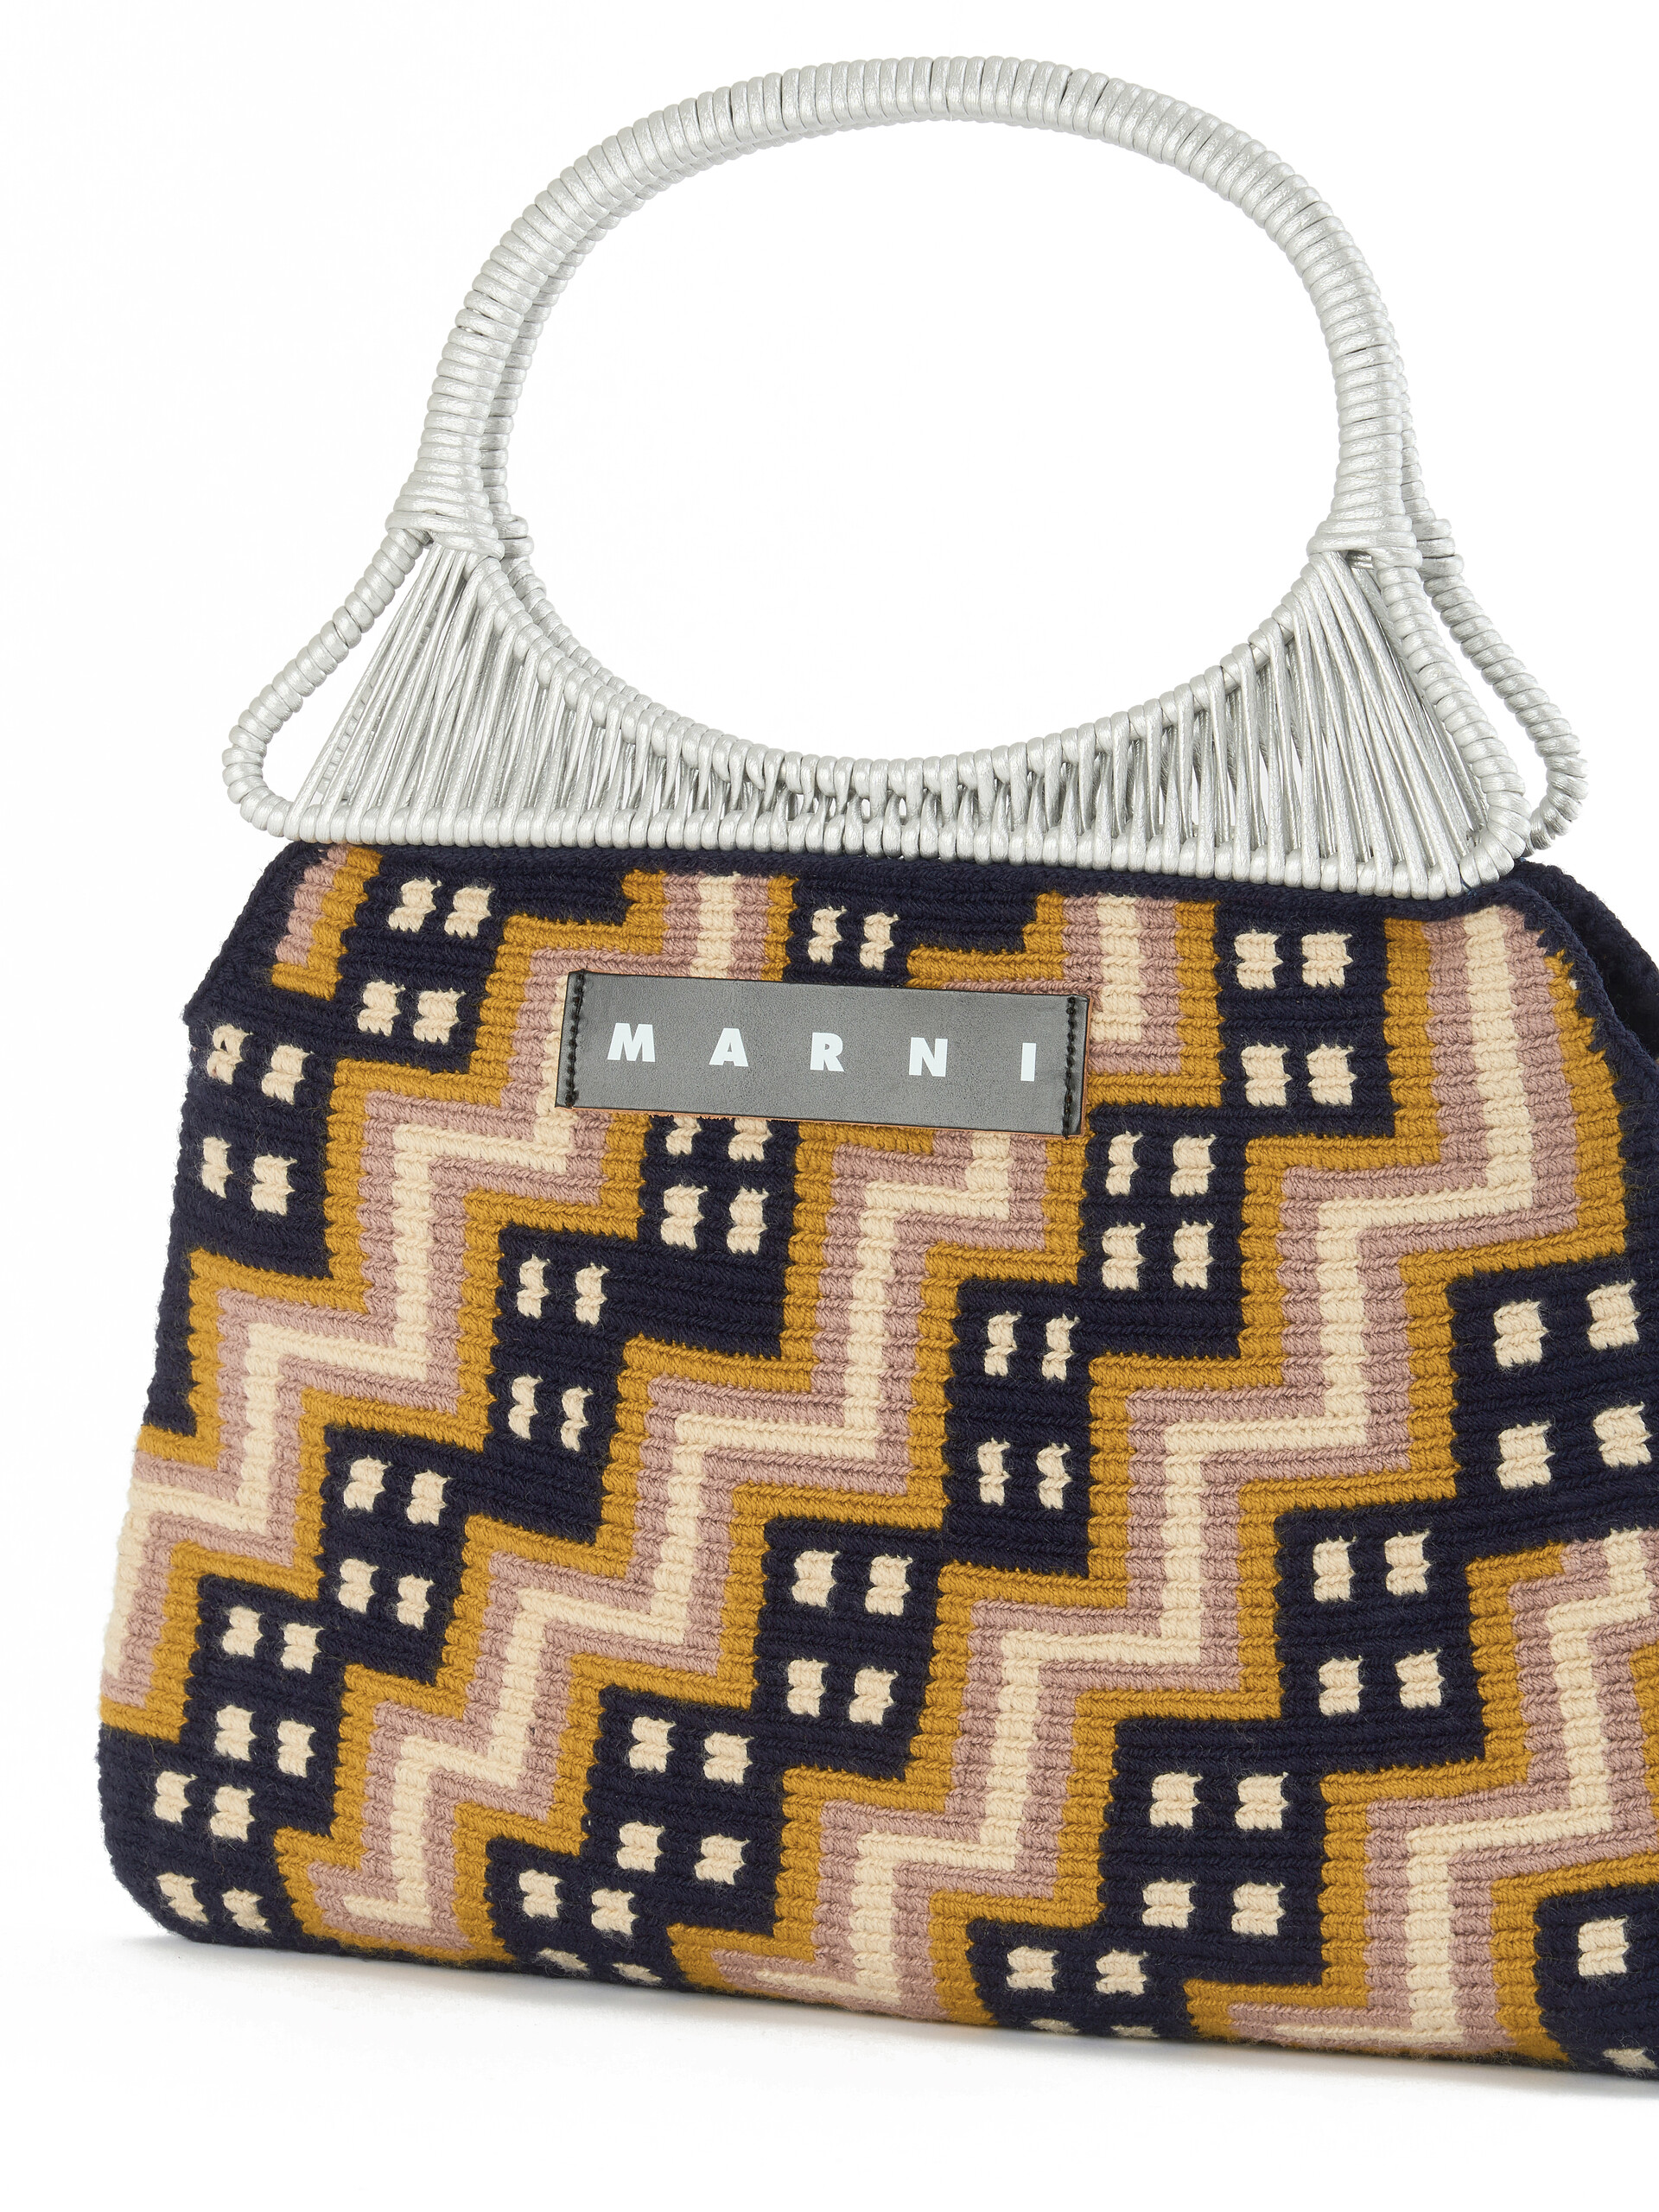 Orange geometric cotton knit MARNI MARKET handbag - Shopping Bags - Image 4